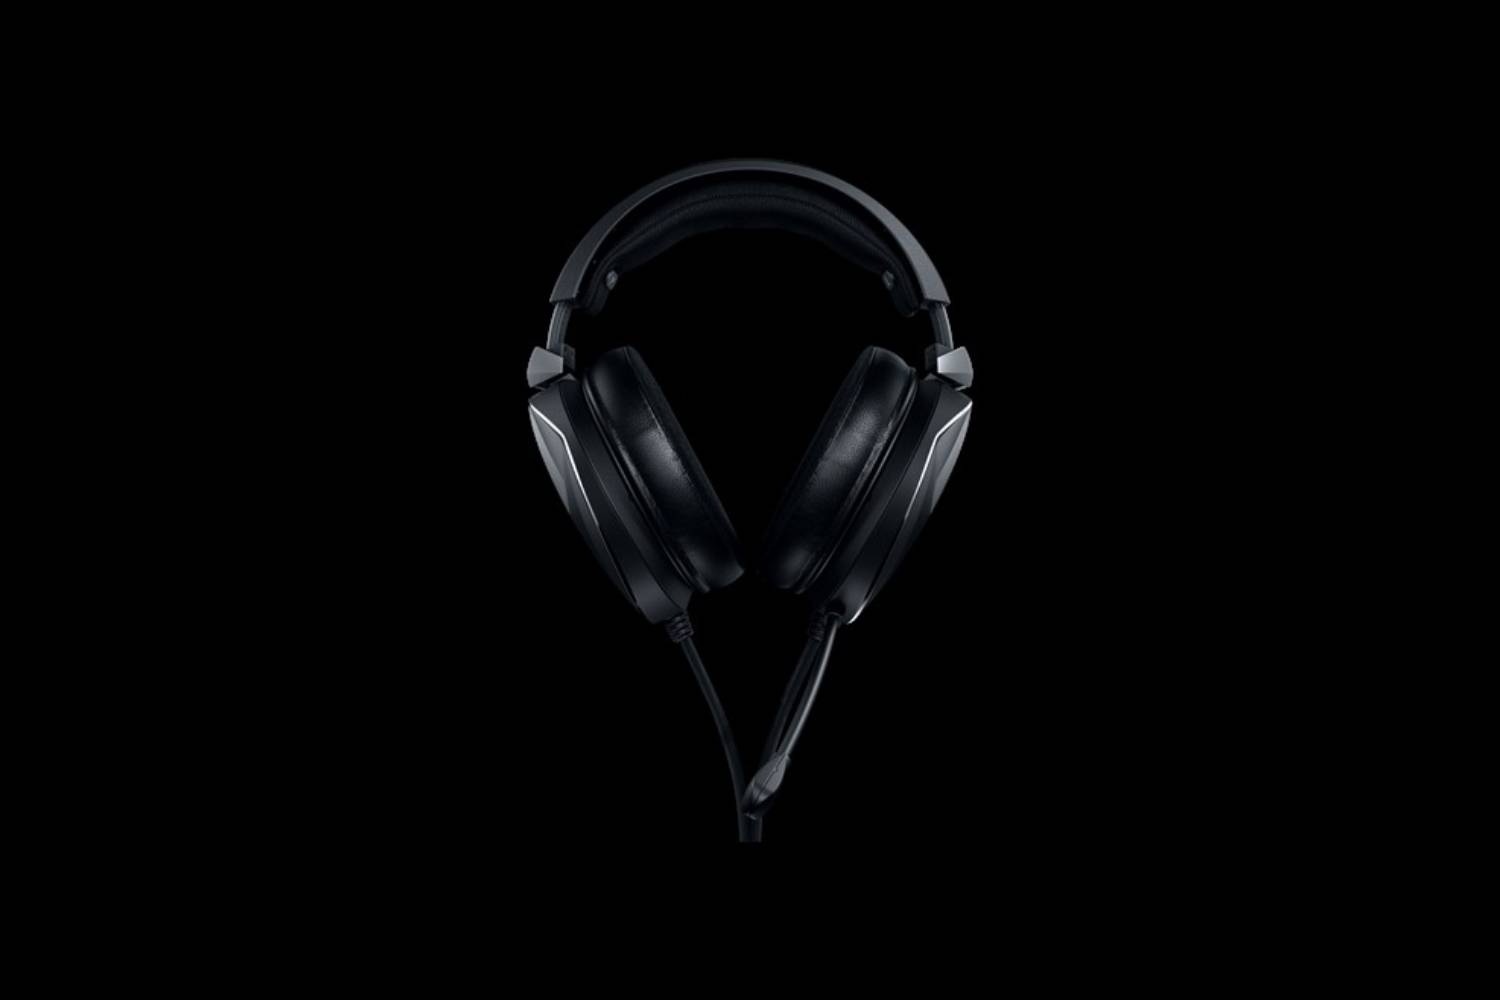 Asus ROG Theta 7.1 headphones